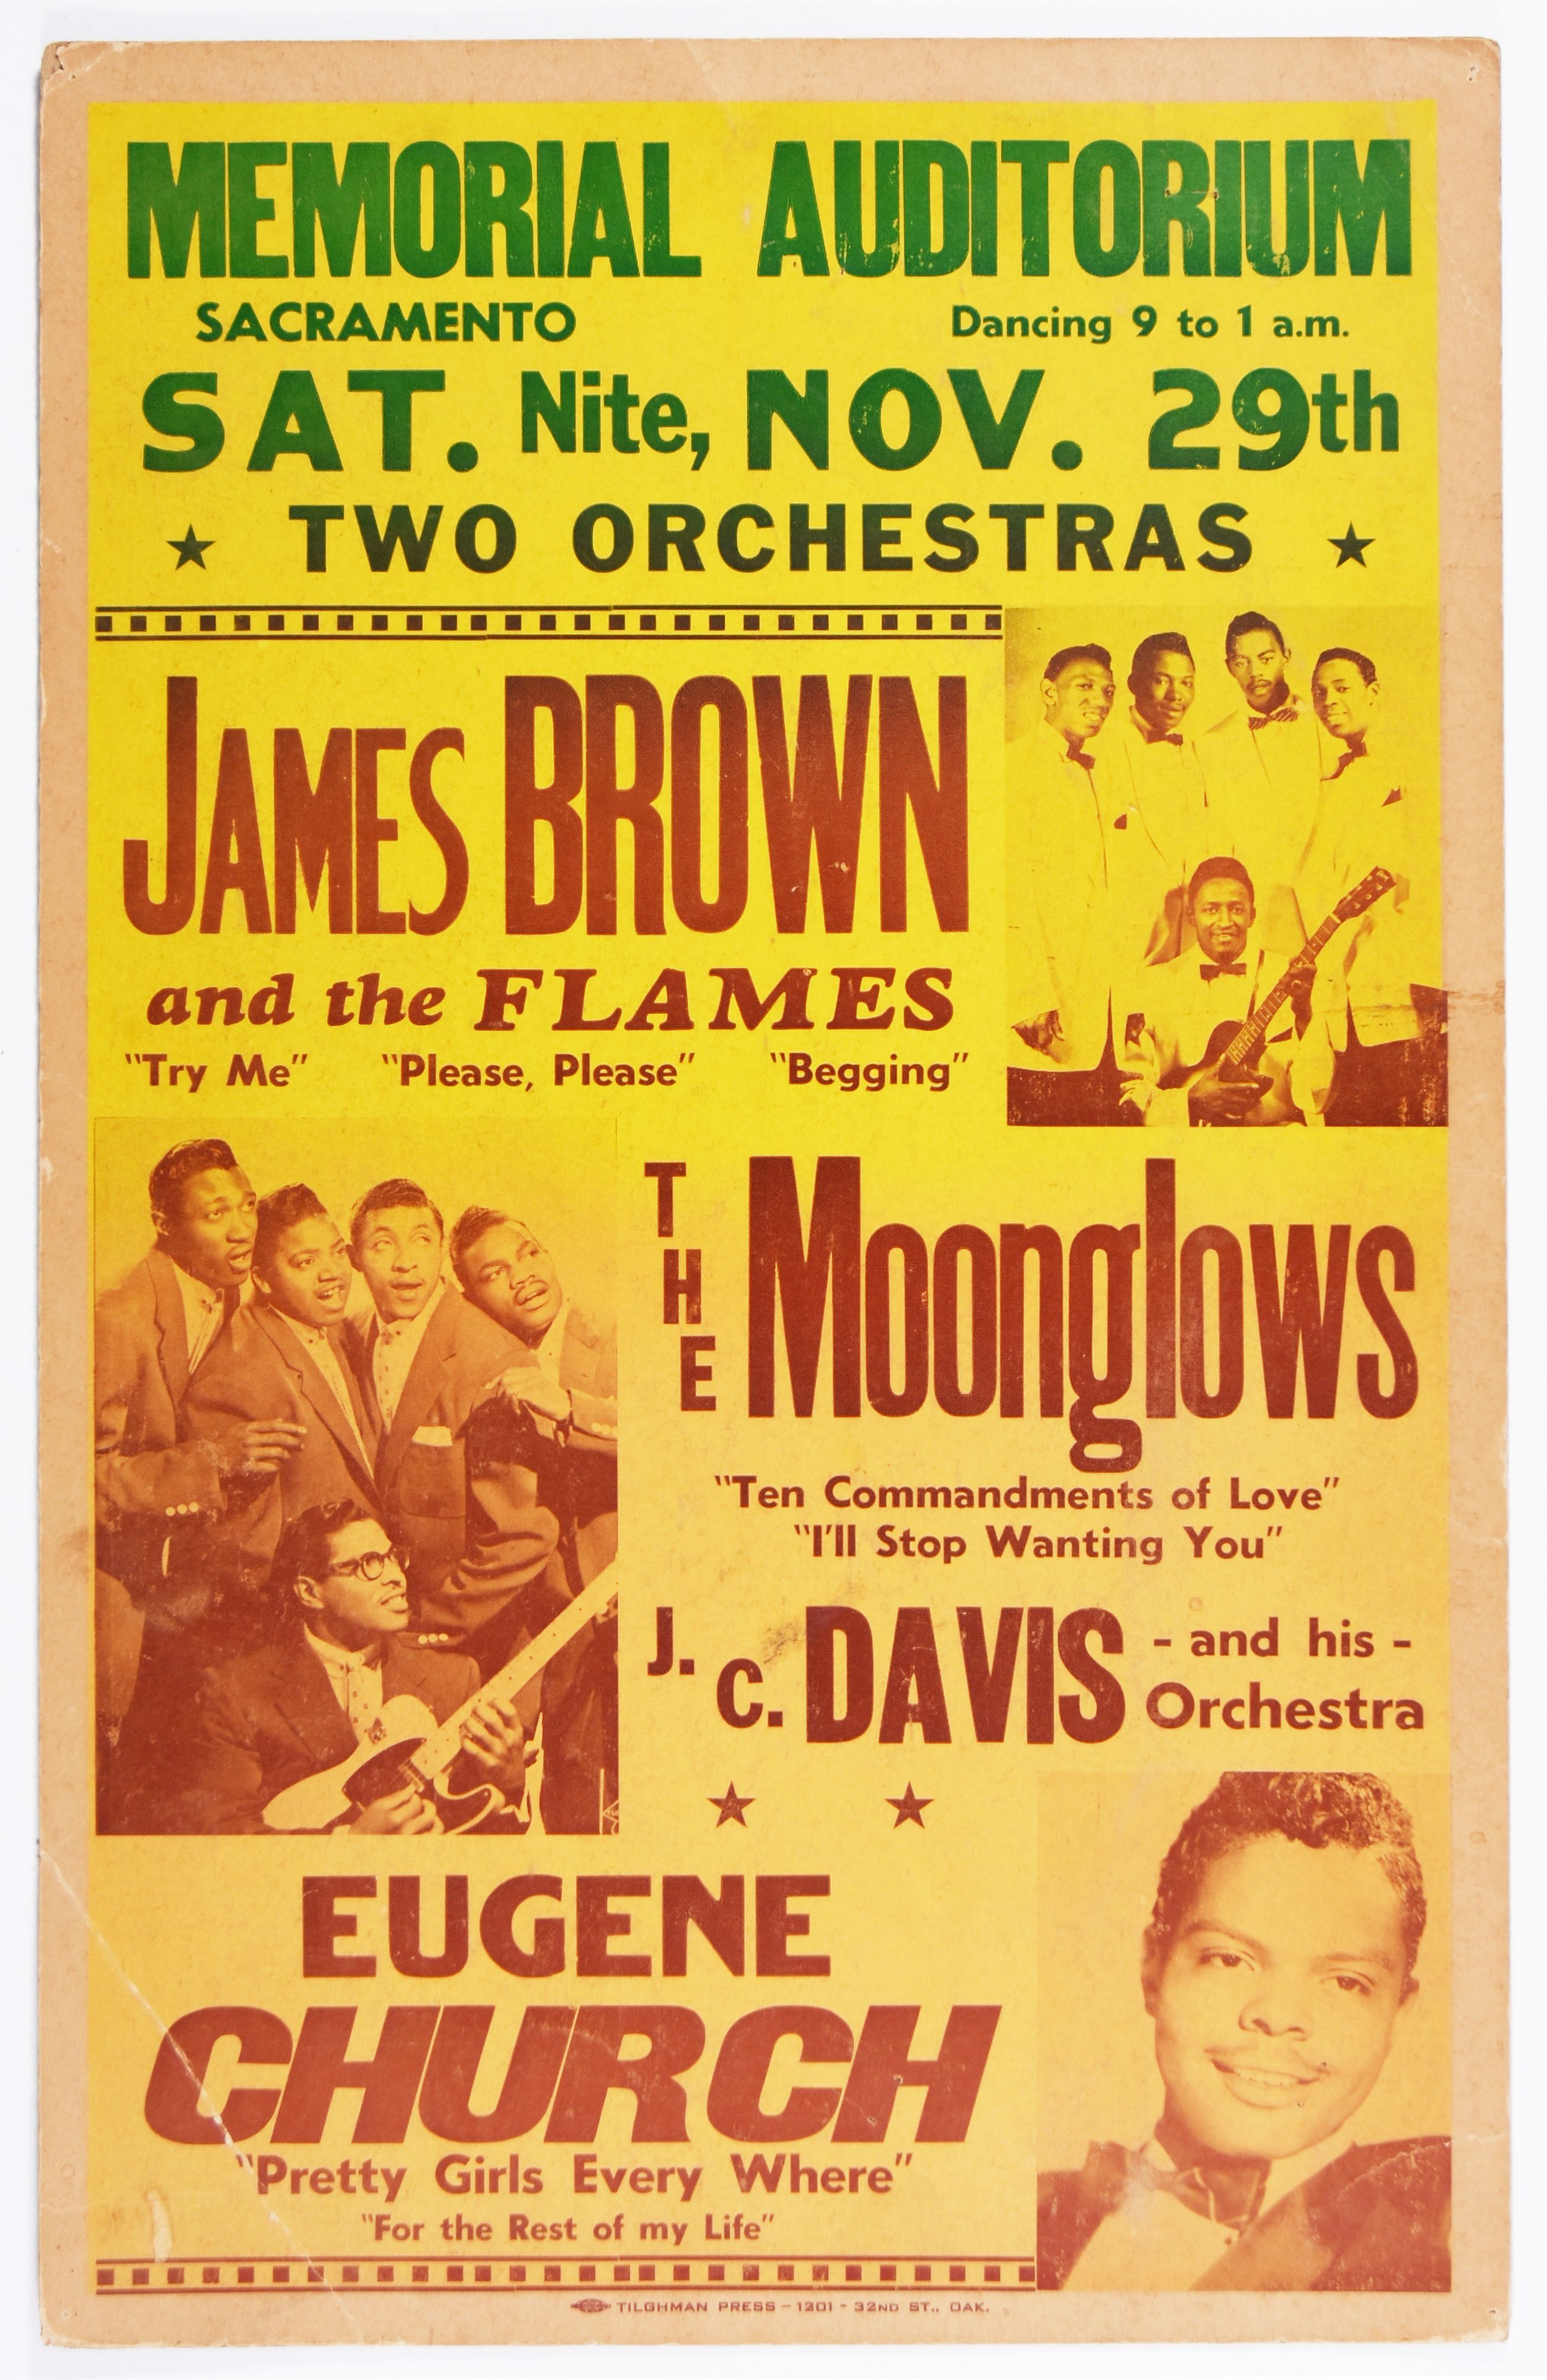 James Brown & The Flames at Memorial Auditorium 1958 Concert Poster